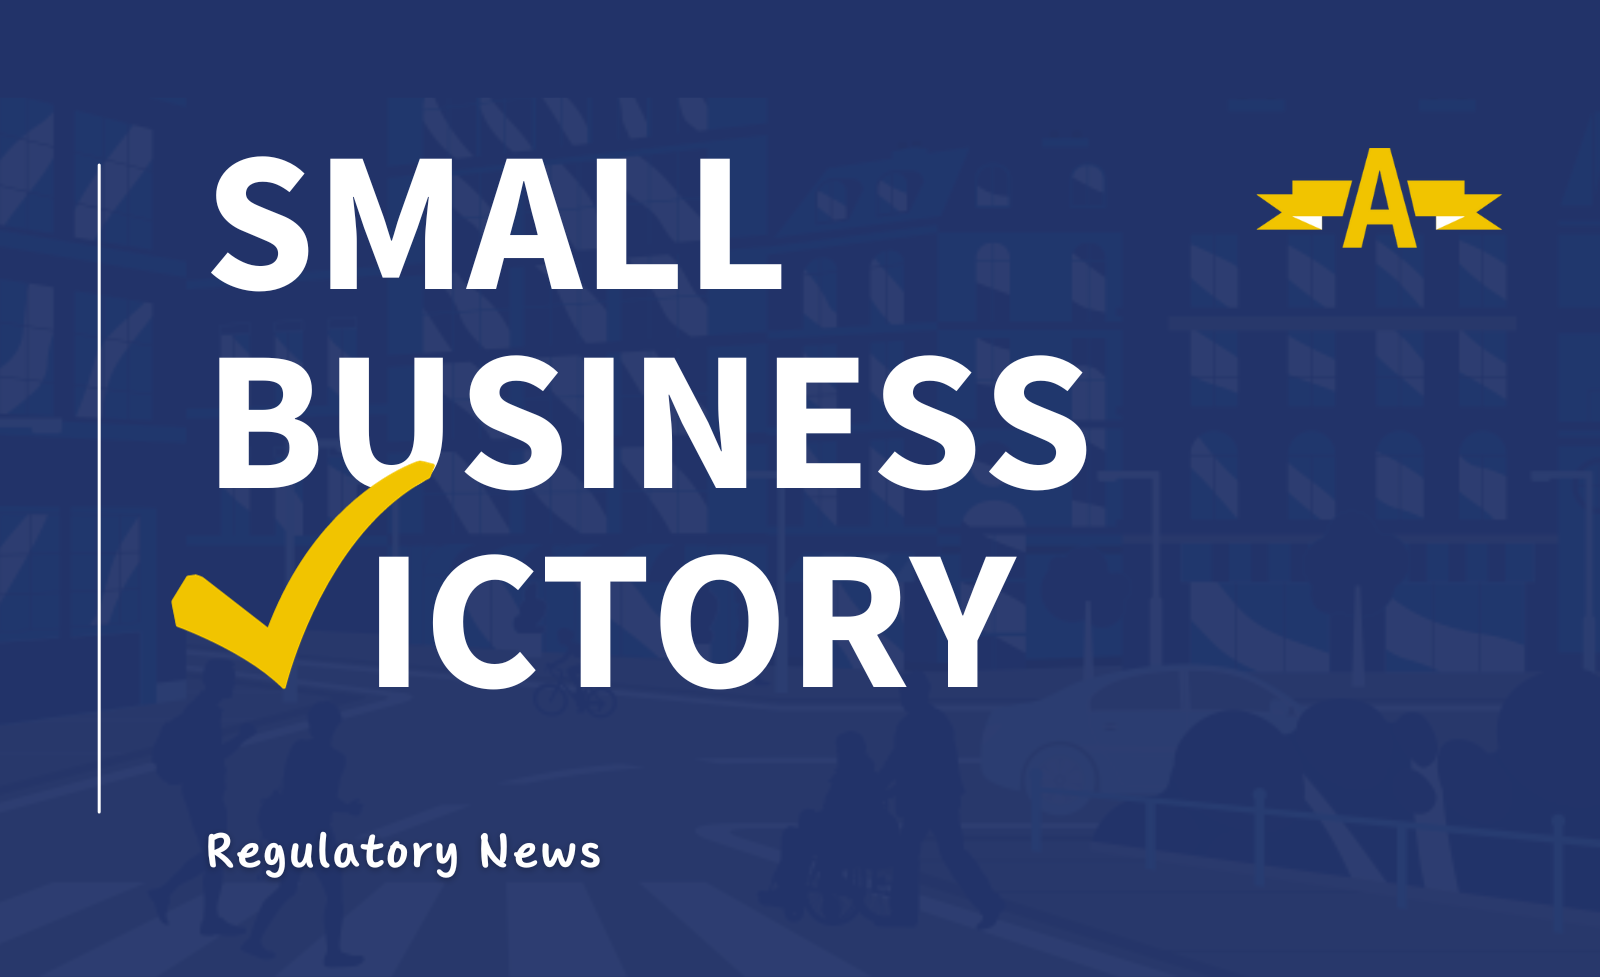 Small Business Victory Regulatory News